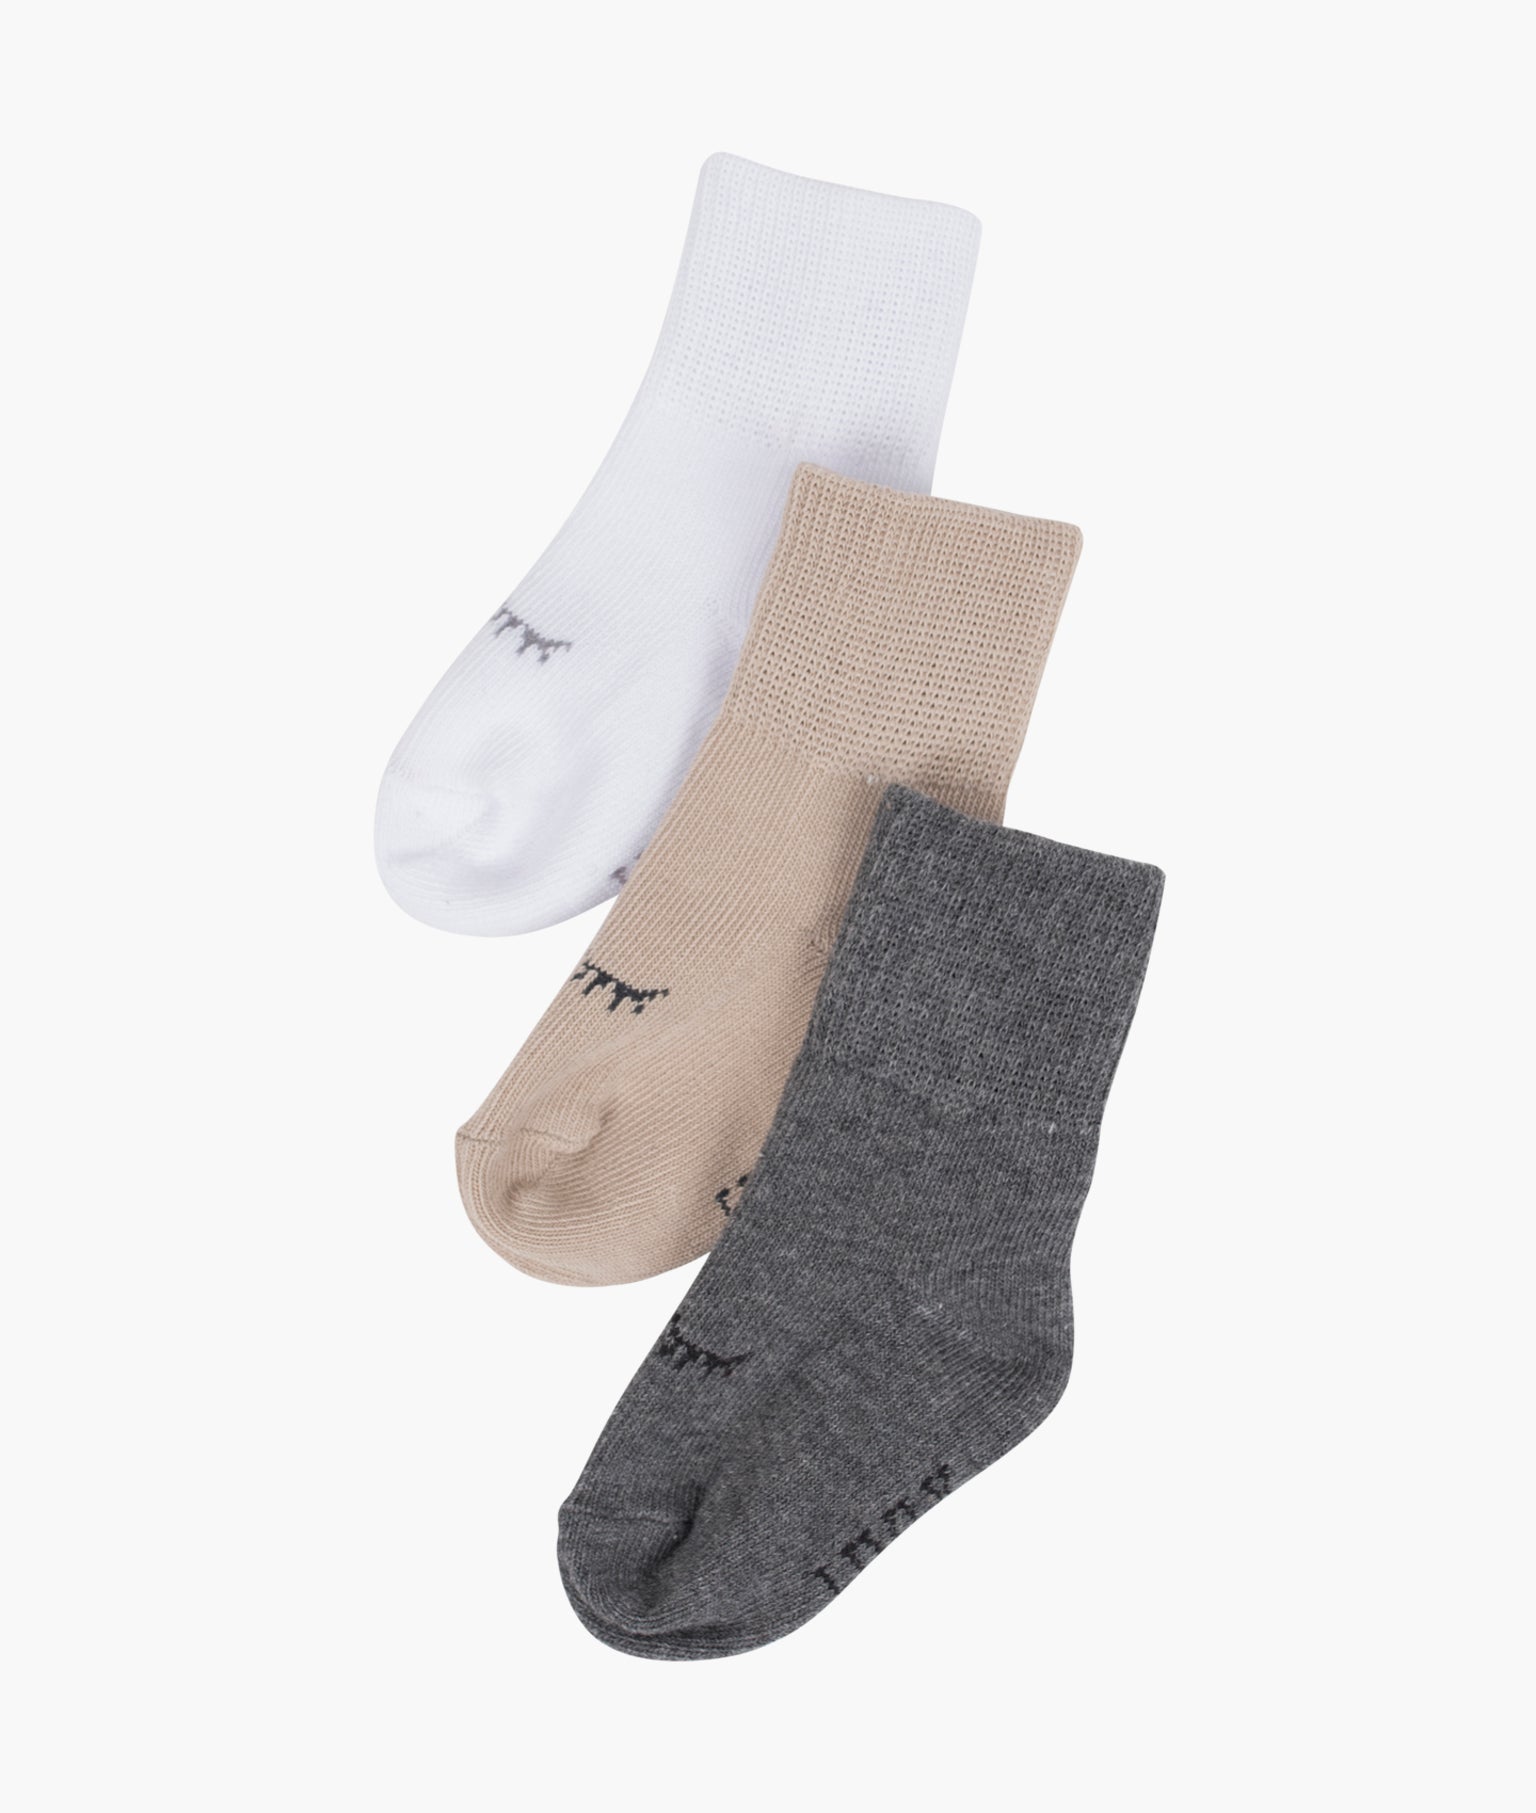 SC 3-Pack Socks - White/Khaki/Grey